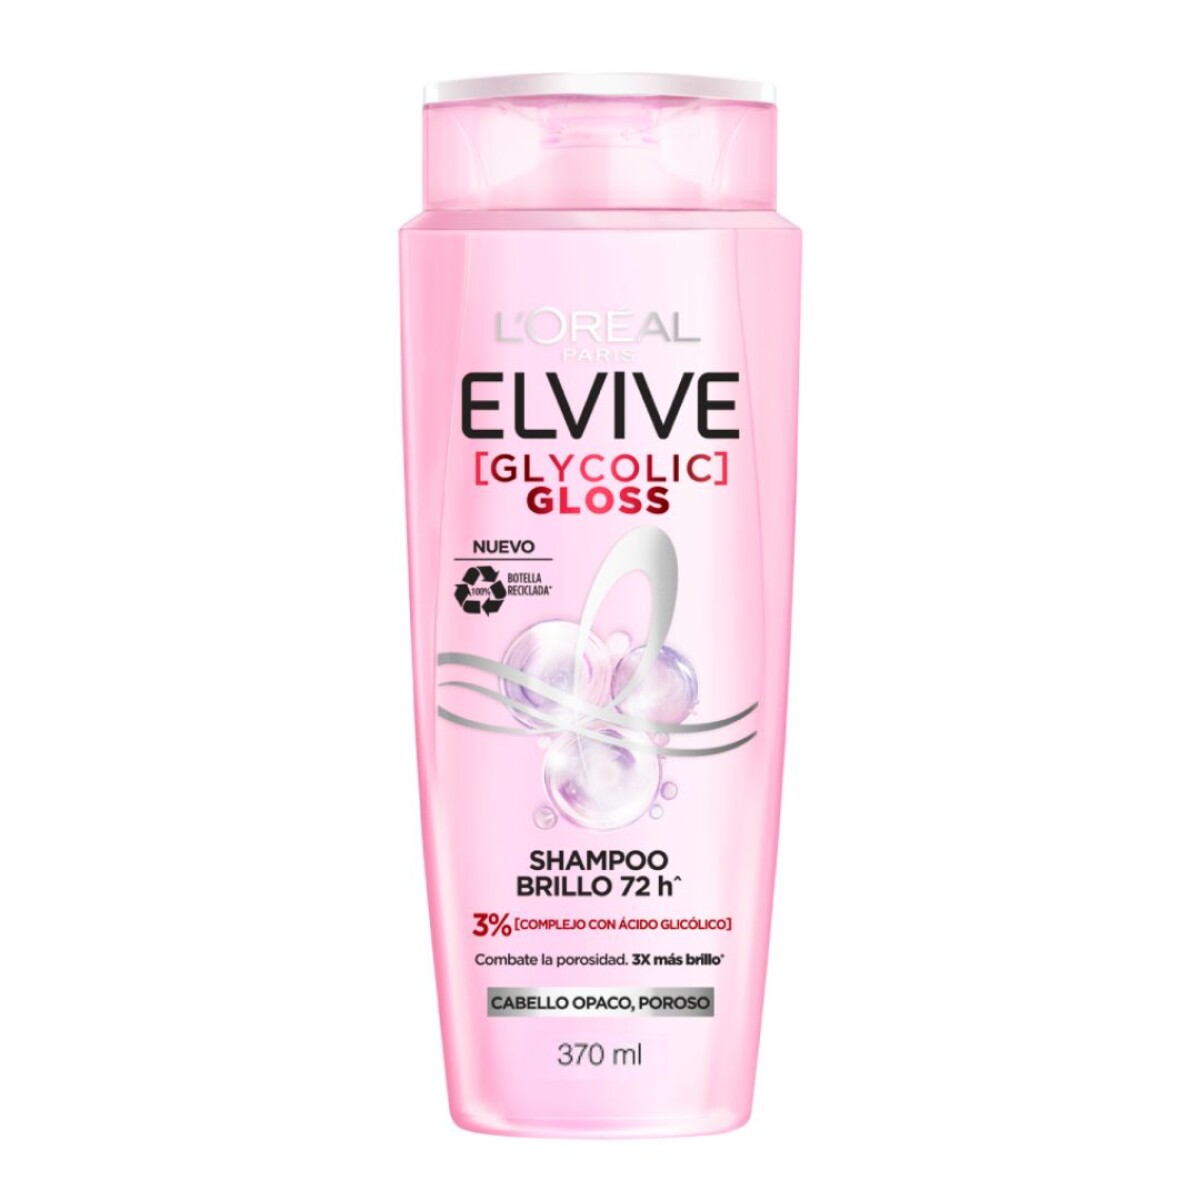 Shampoo 370ml Glycolic Gloss Elvive 